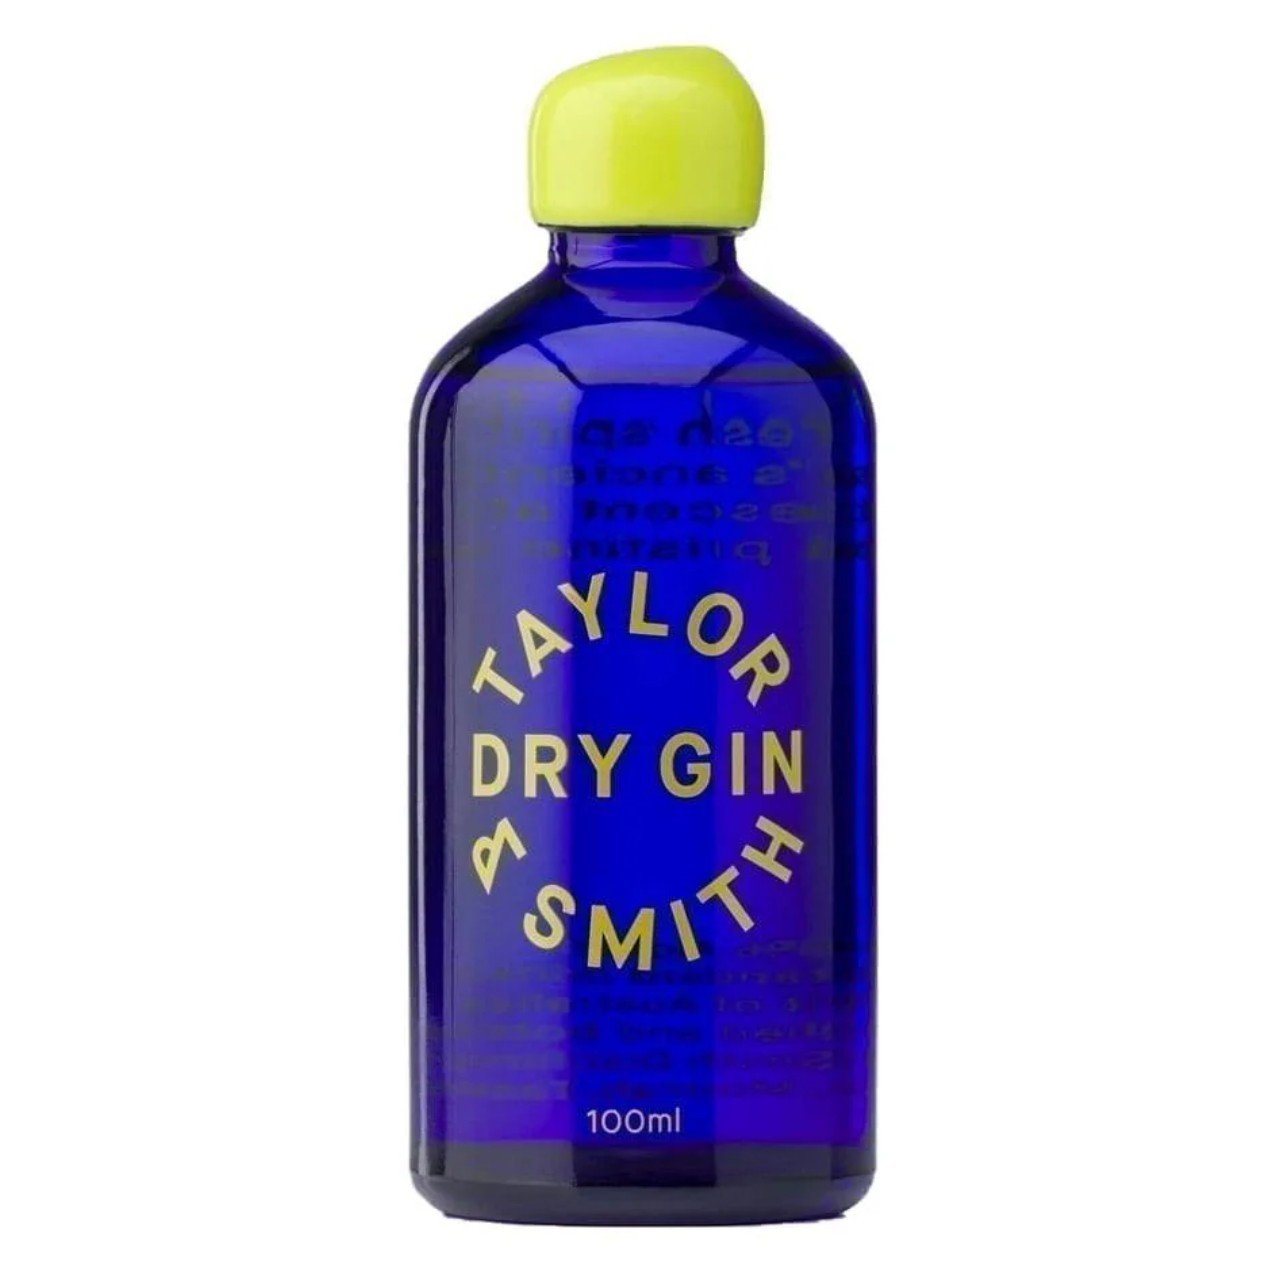 Taylor & smith Dry Gin 46% 100ml - Gin - Liquor Wine Cave